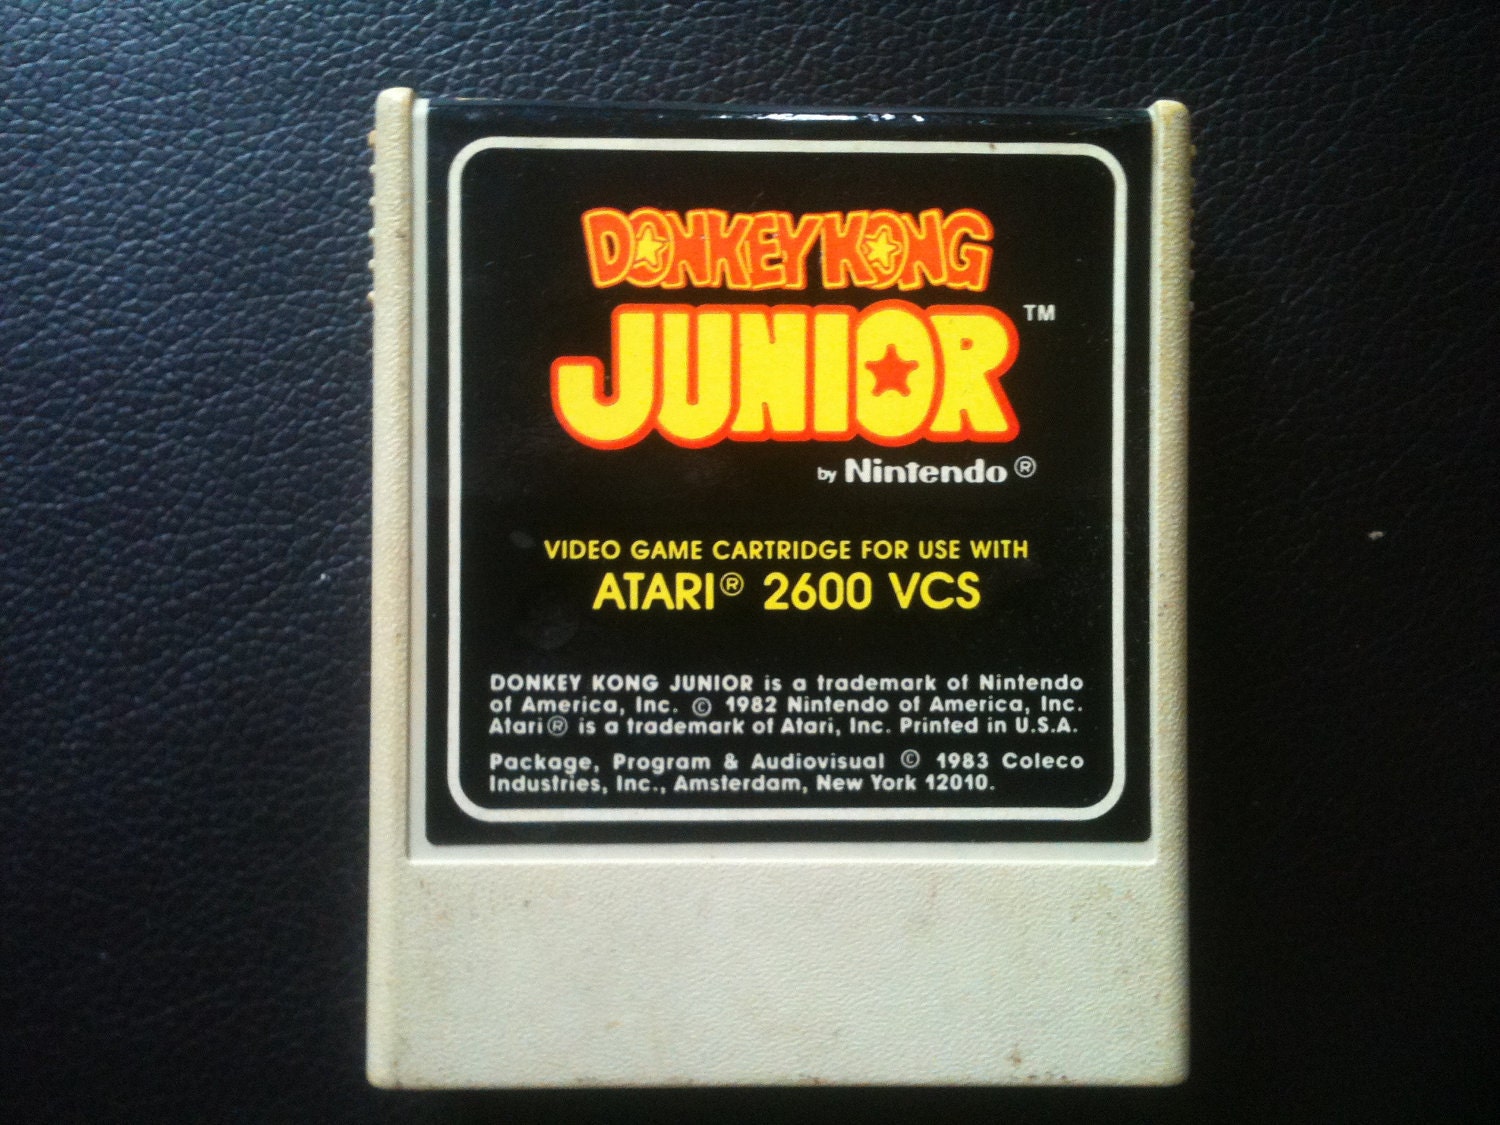 Donkey Kong Jr Game Online